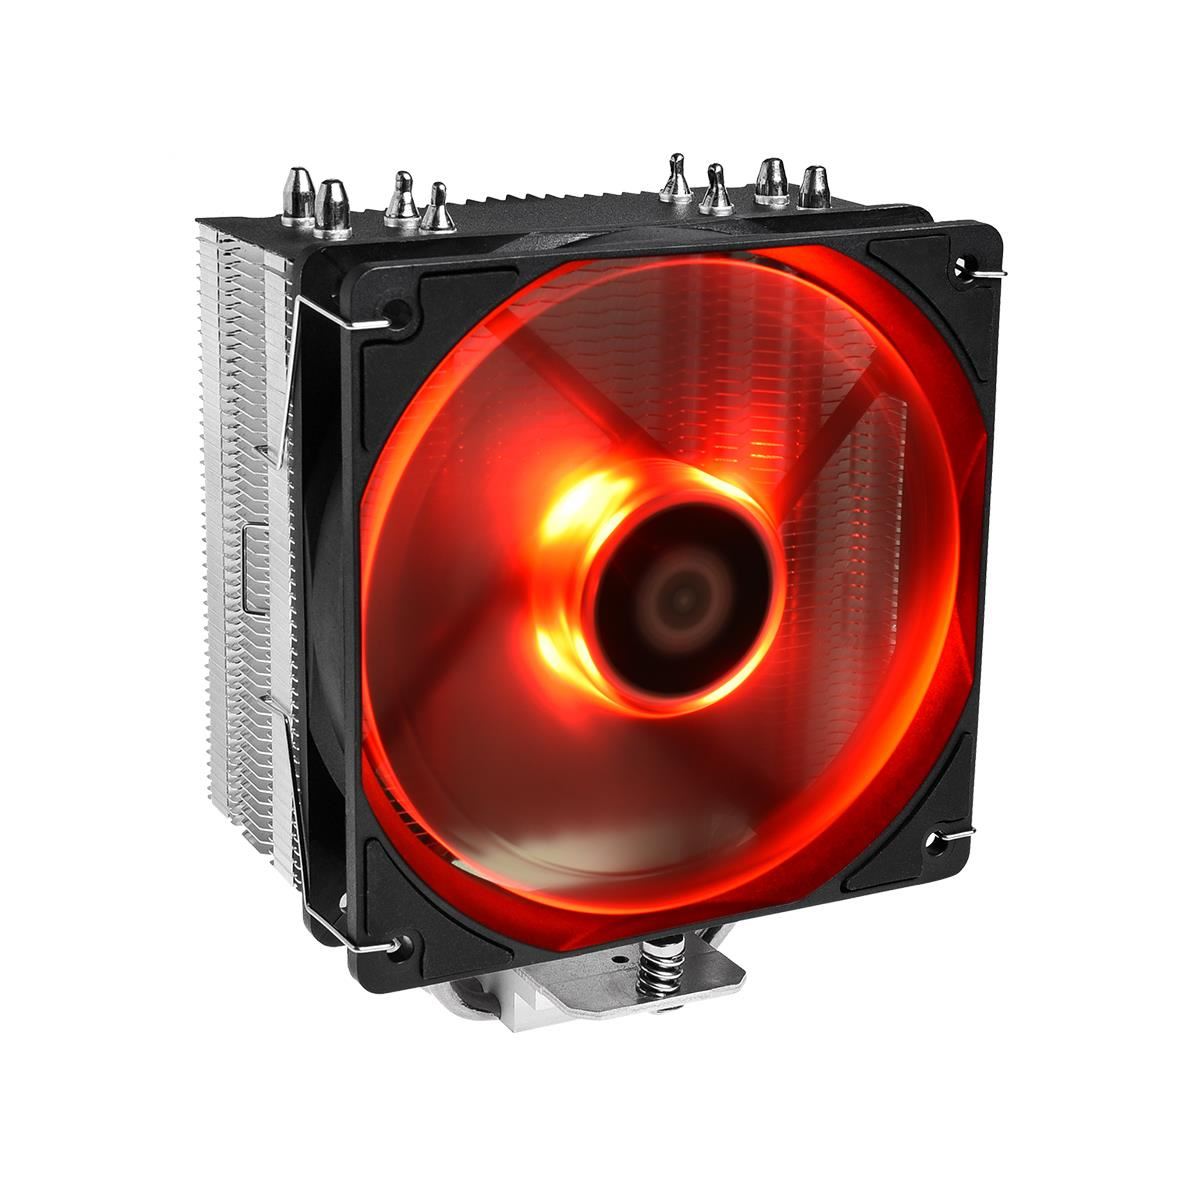 Cooler procesor ID-Cooling SE-224-XT iluminare rosie